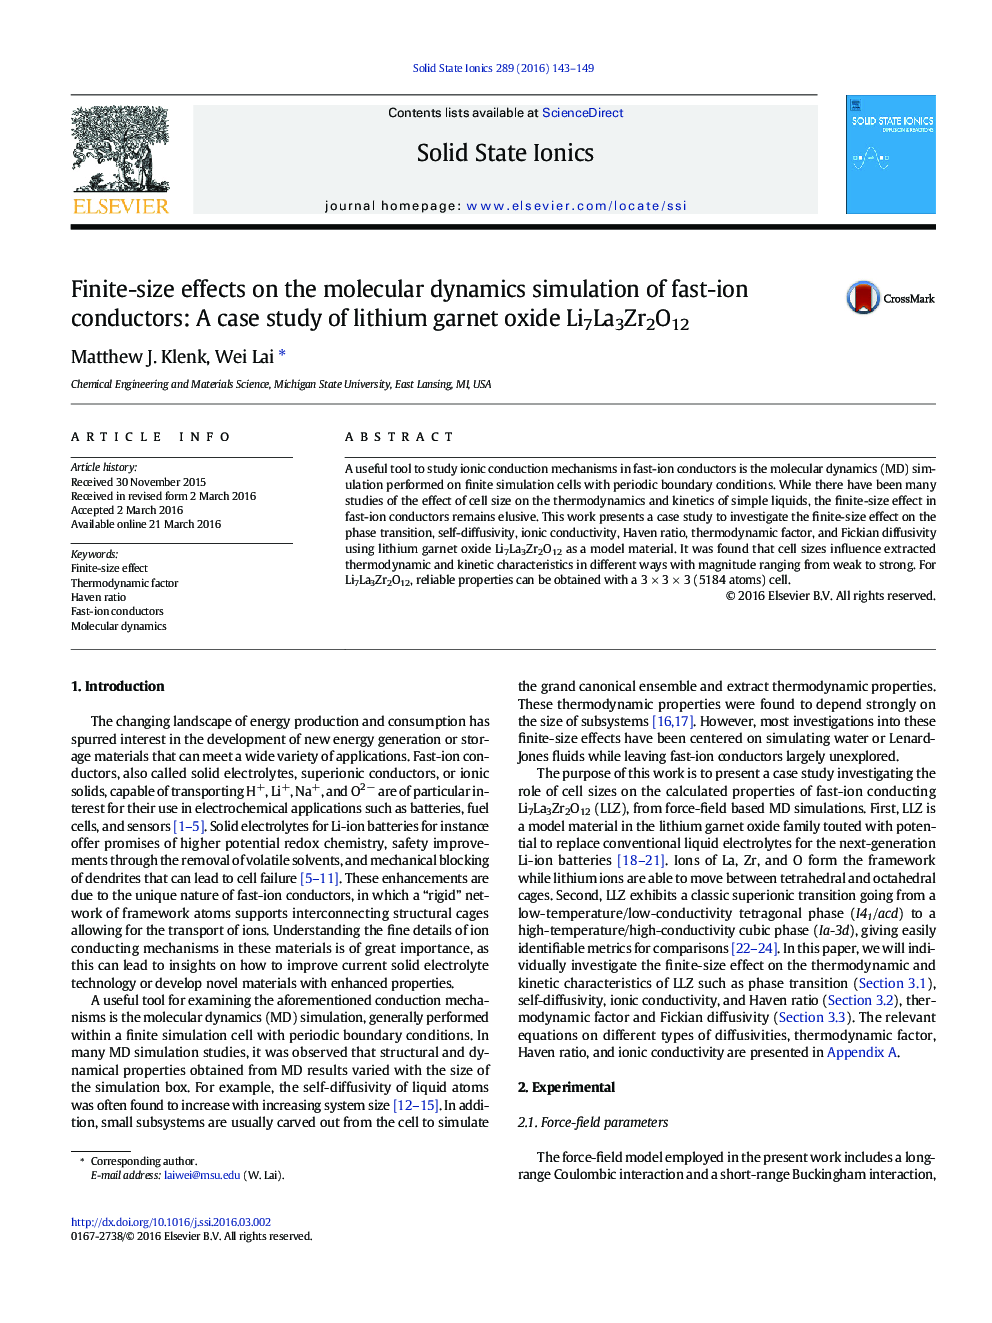 Finite-size effects on the molecular dynamics simulation of fast-ion conductors: A case study of lithium garnet oxide Li7La3Zr2O12